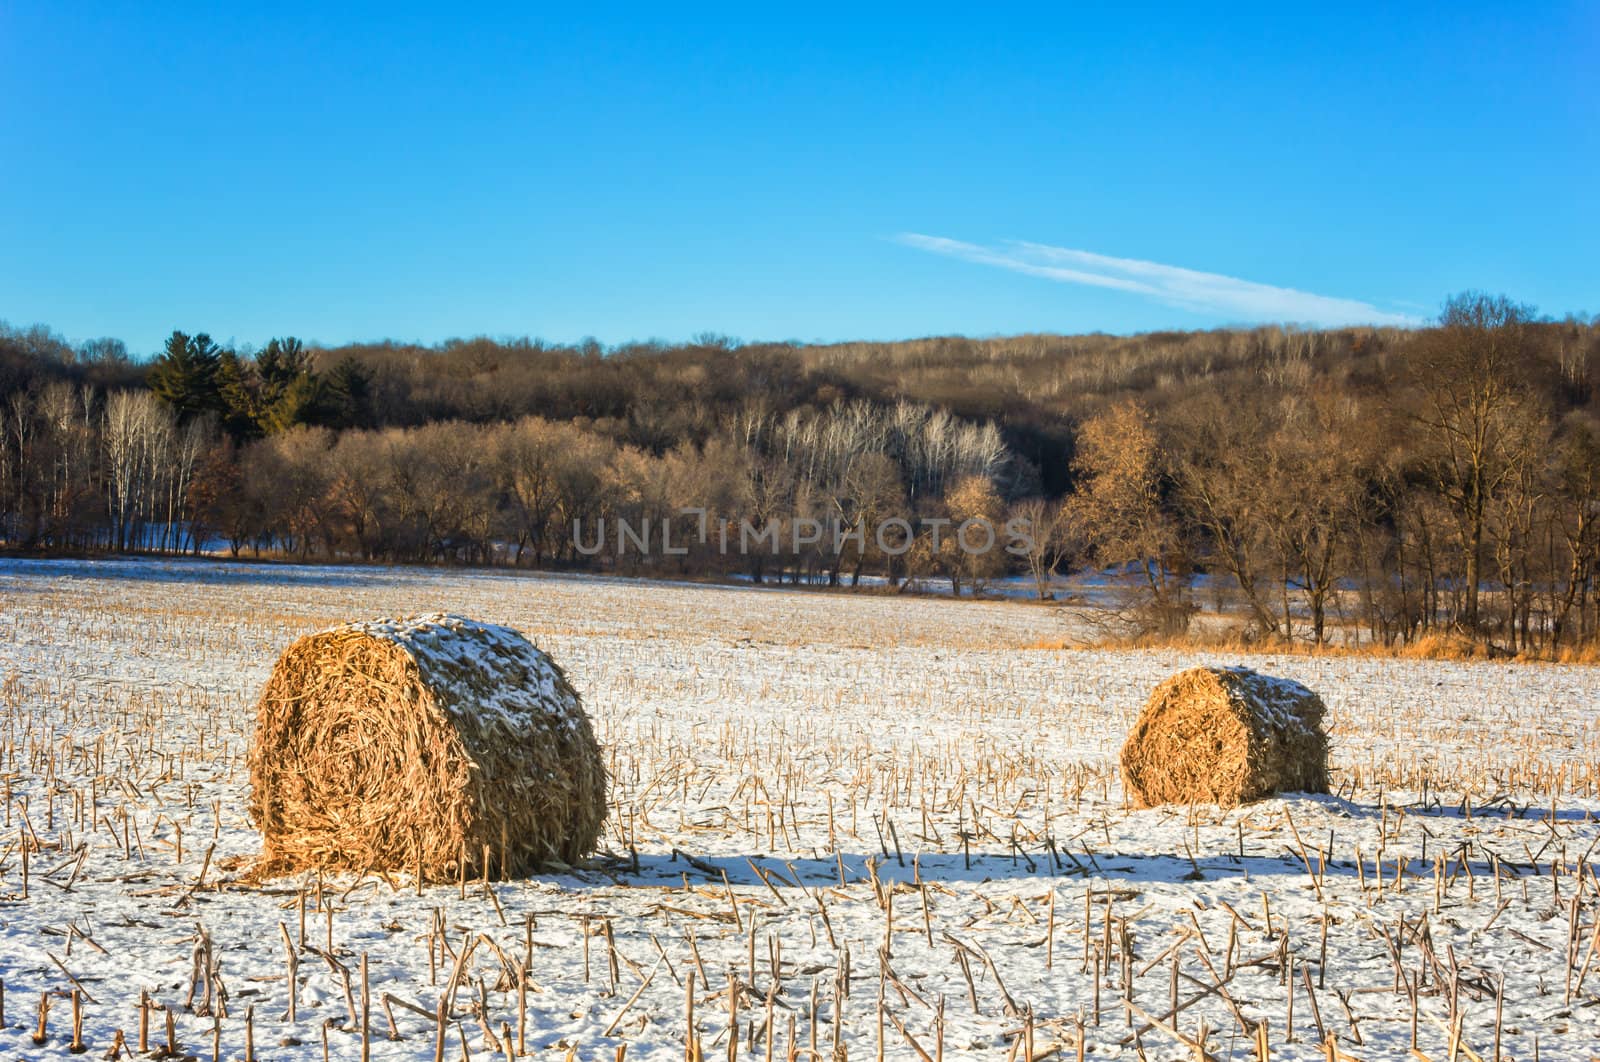 Haystacks on the Frozen Field by wolterk